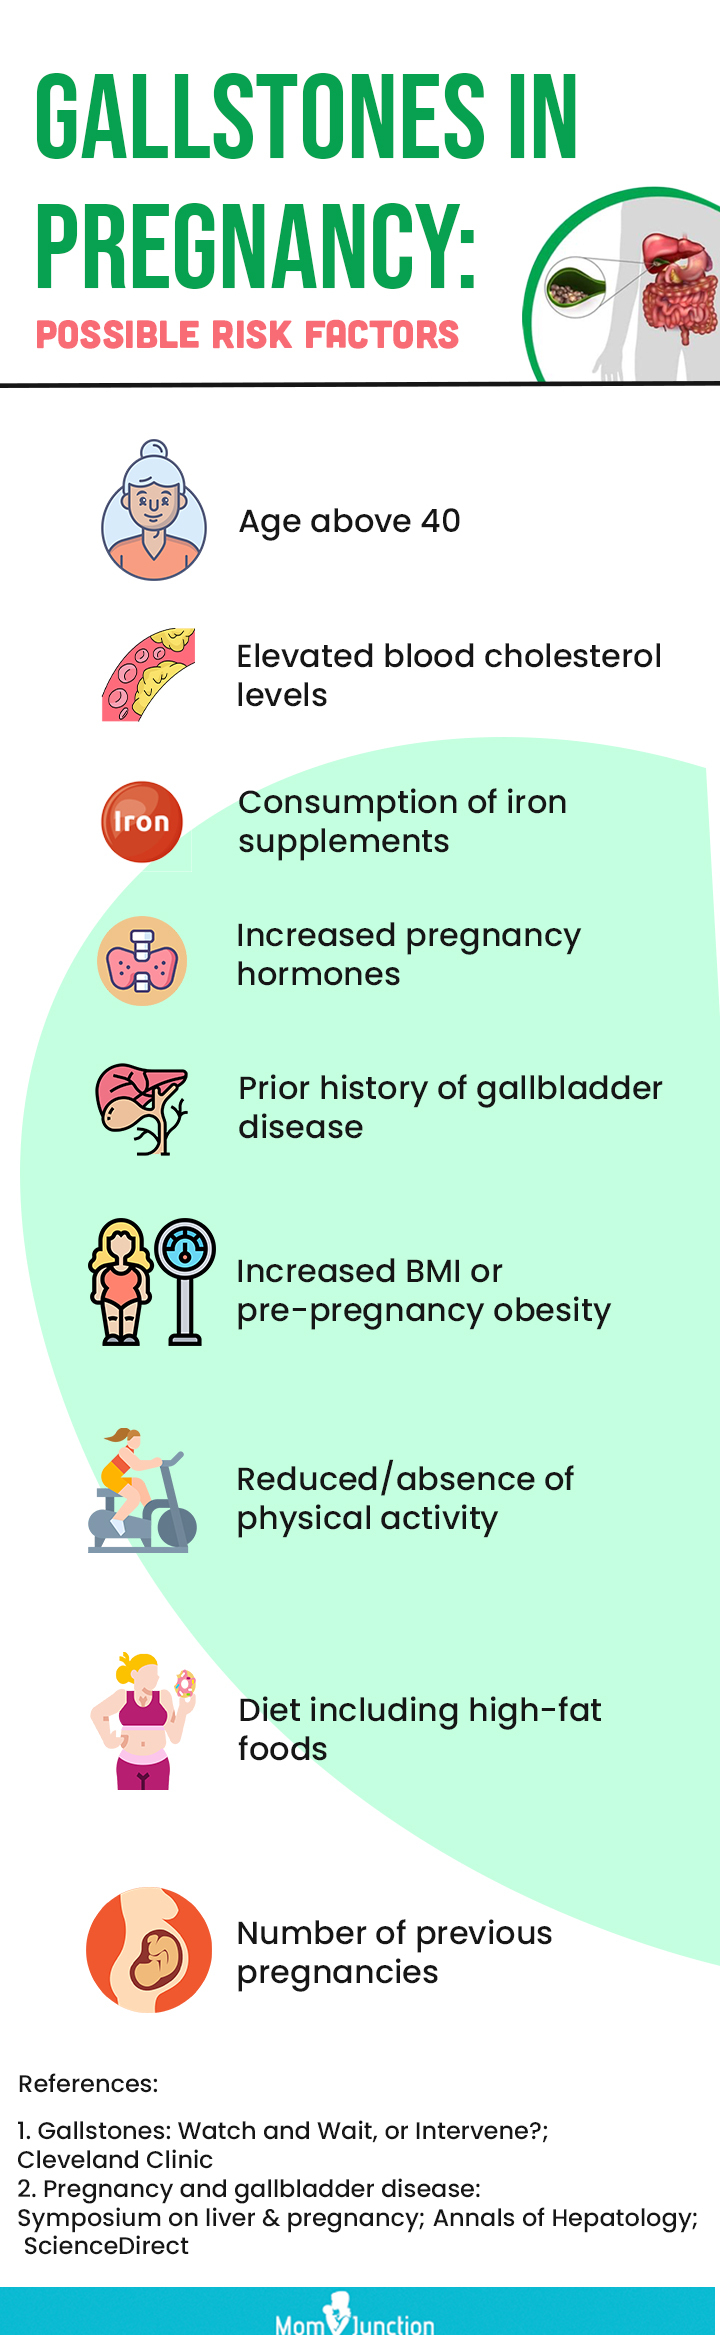 gallstones in pregnancy possible risk factors (infographic)